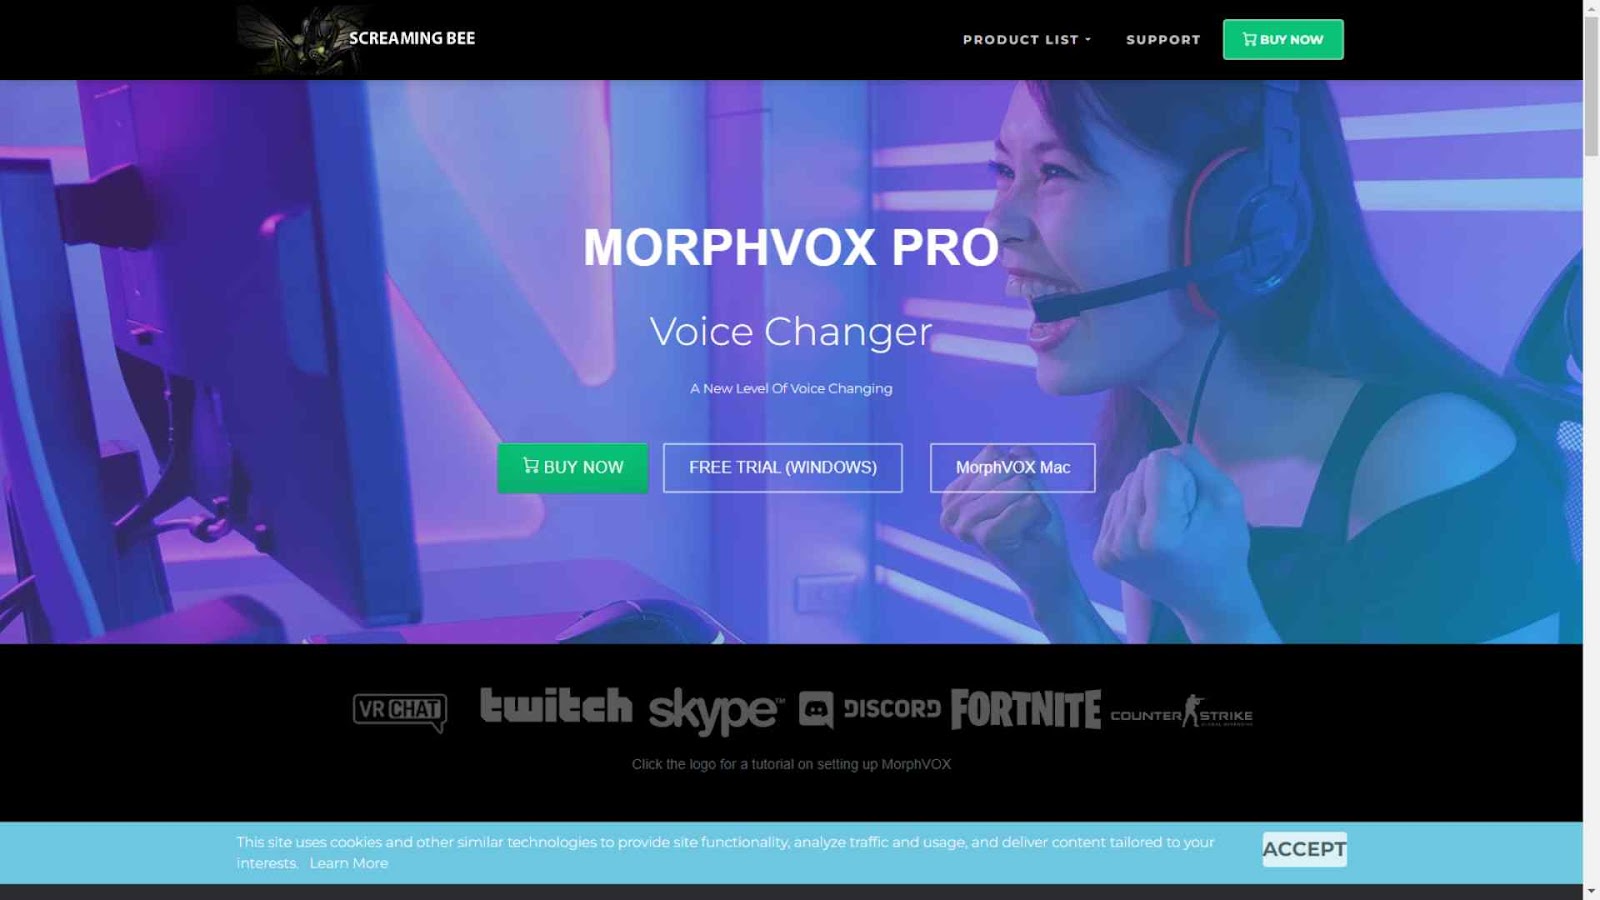 Morphvox Pro